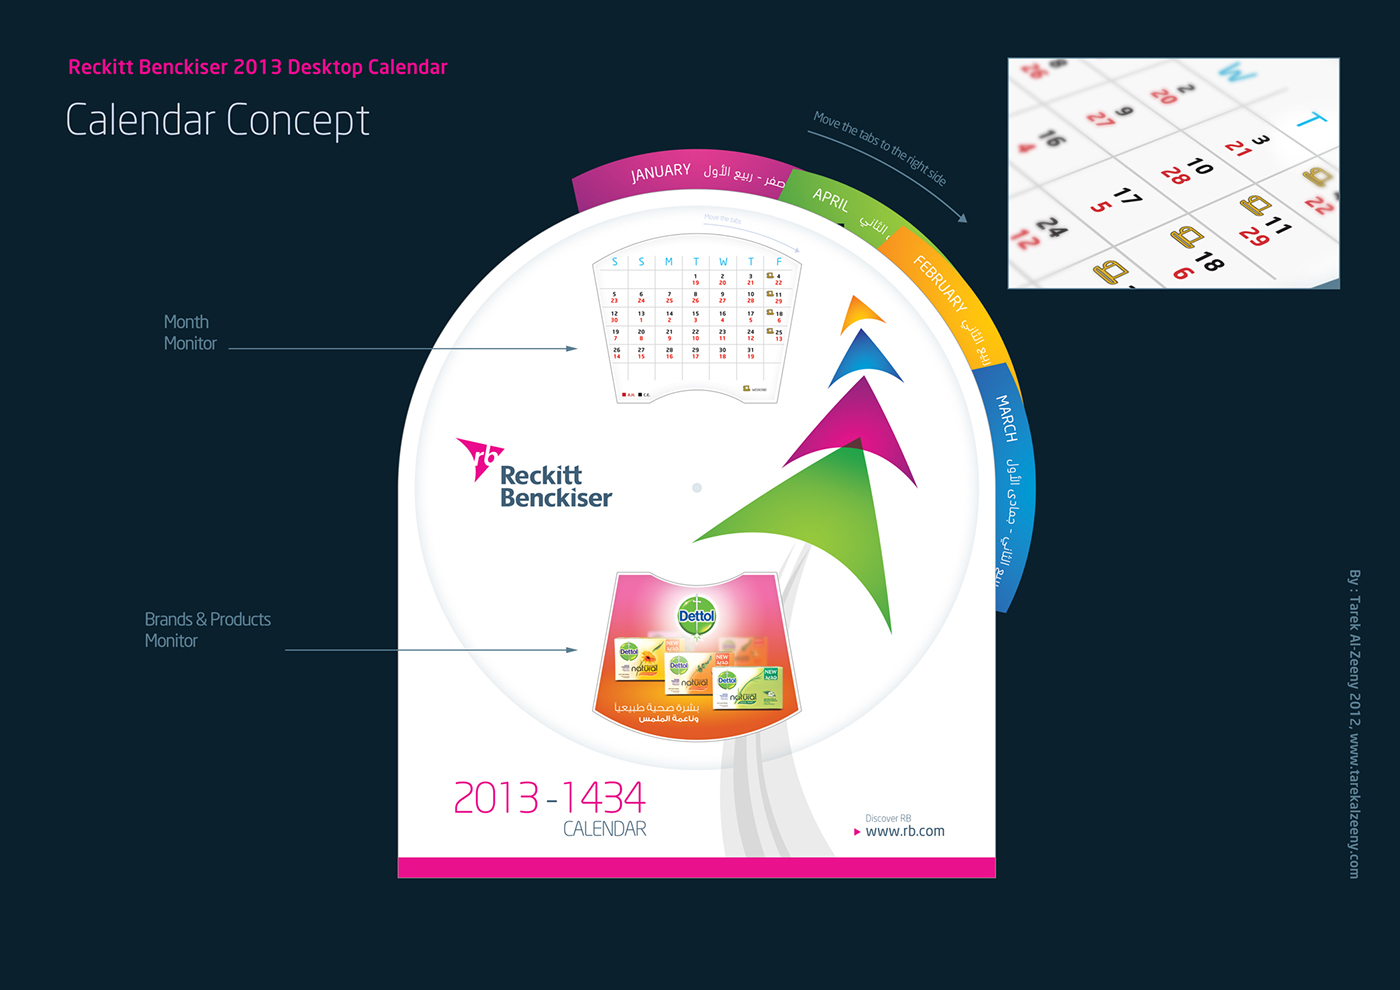 Reckitt Benckiser 2013 desktop calendar tarek alzeeny